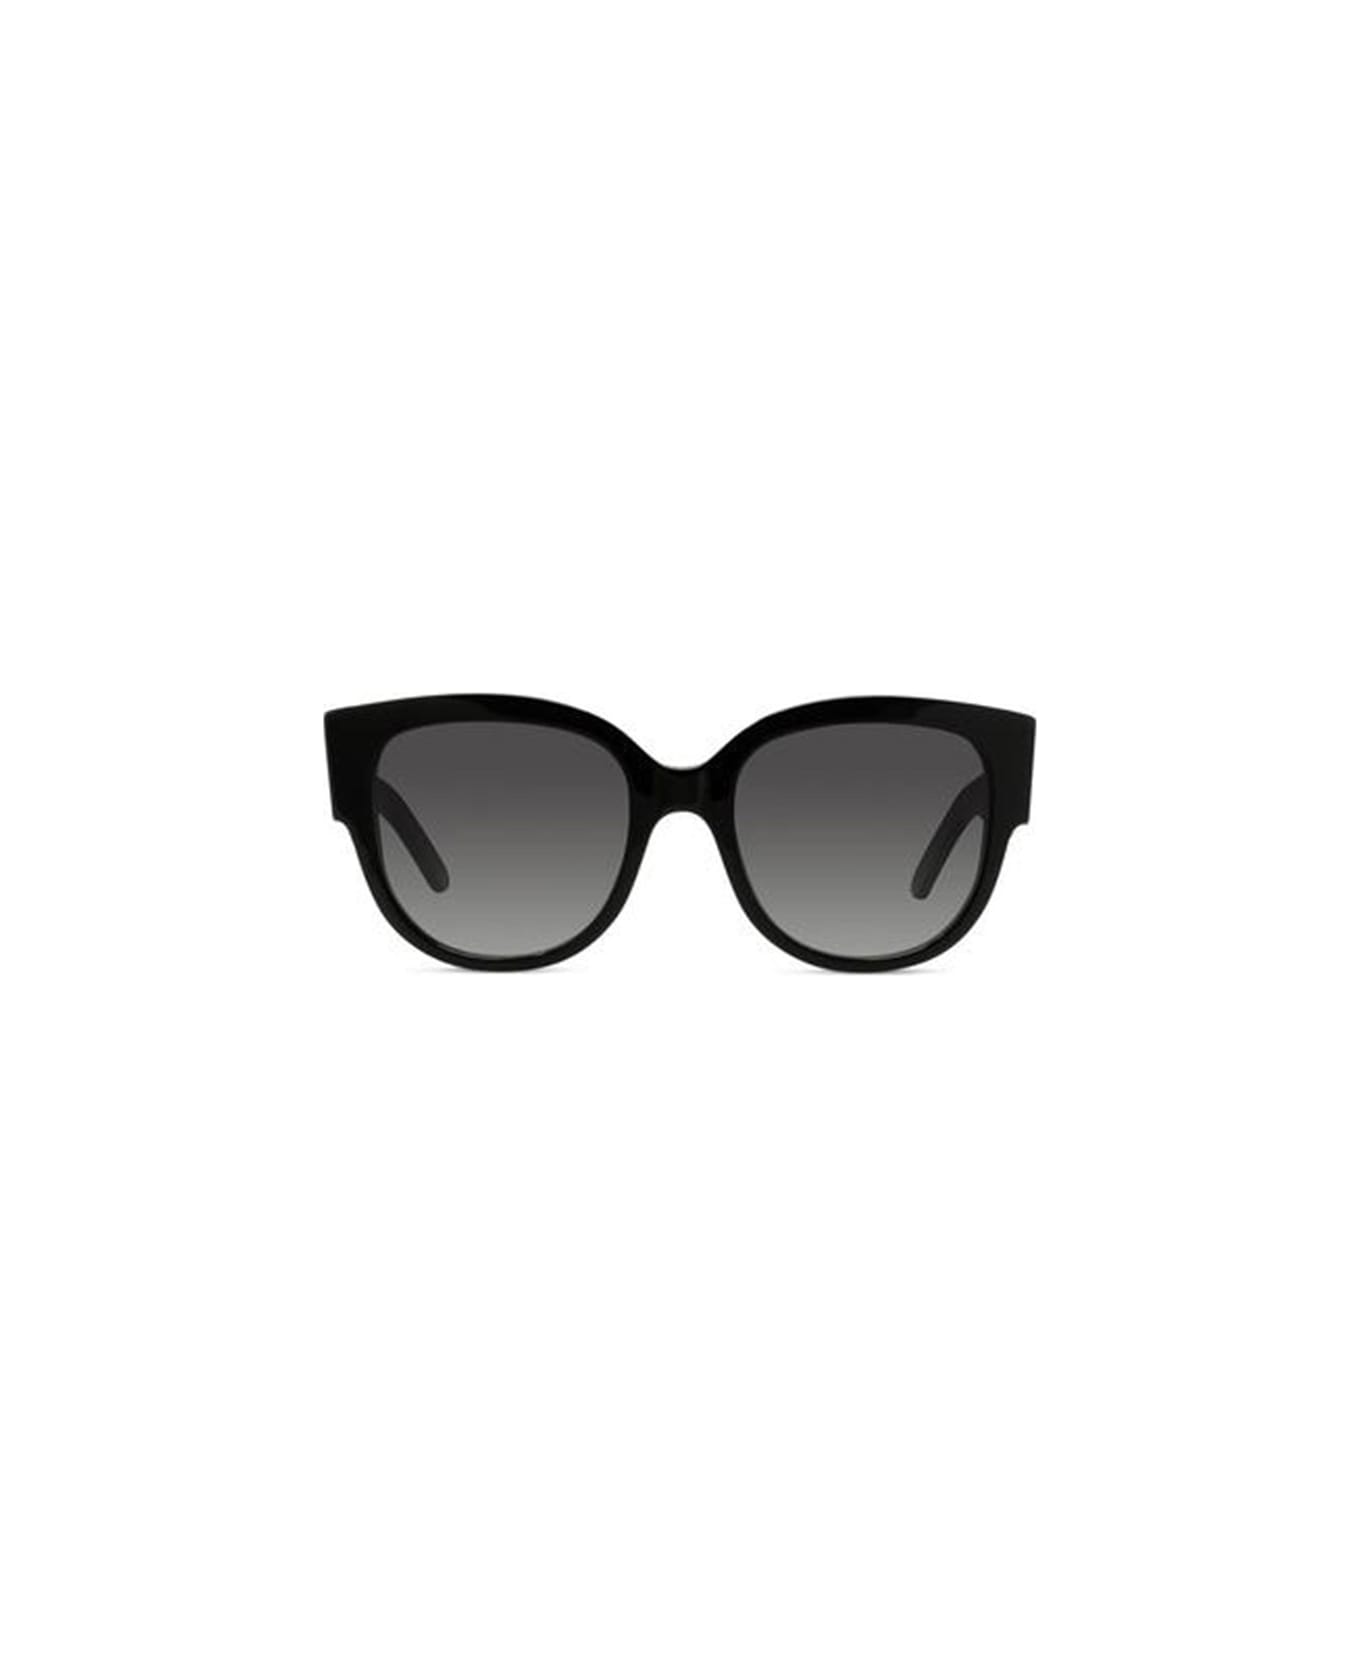 Dior Eyewear Sunglasses - Nero/Grigio sfumato